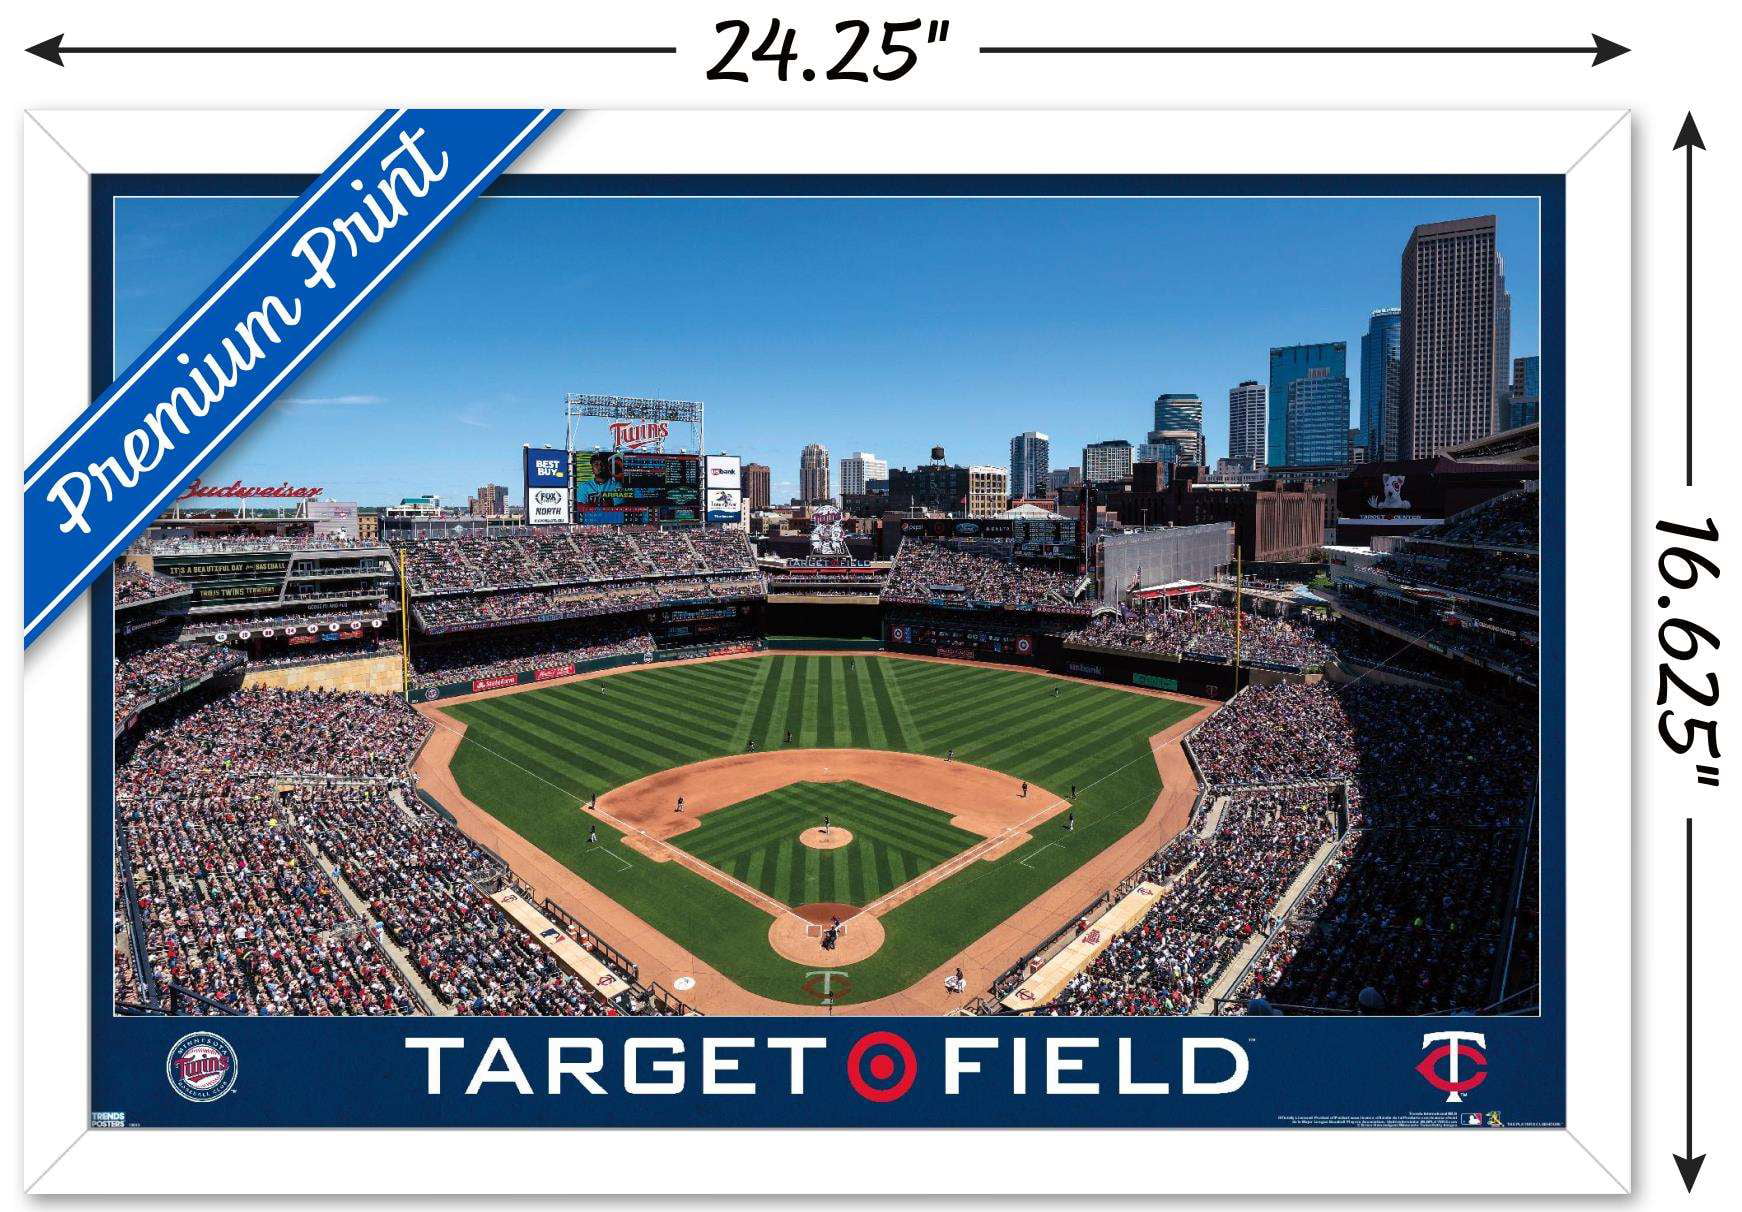 Trends International Mlb Boston Red Sox - Fenway Park 22 Framed Wall Poster  Prints : Target